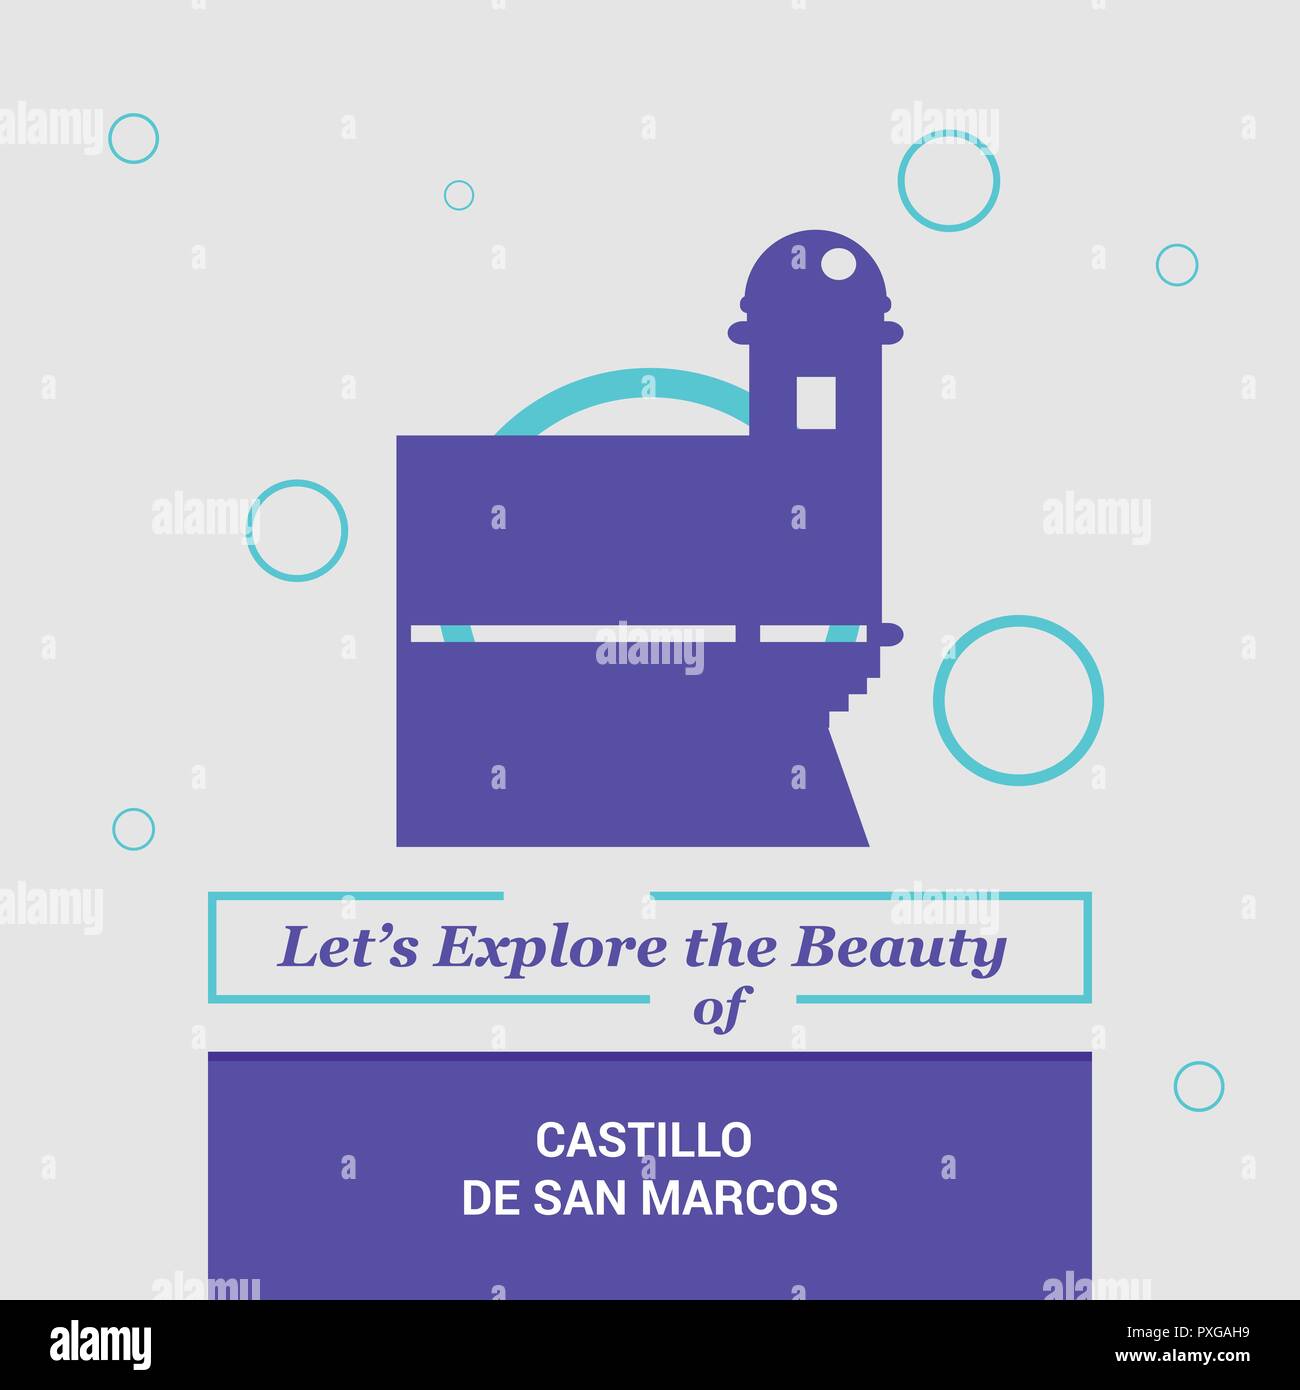 New USPS stamp depicts St. Augustine's Castillo de San Marcos